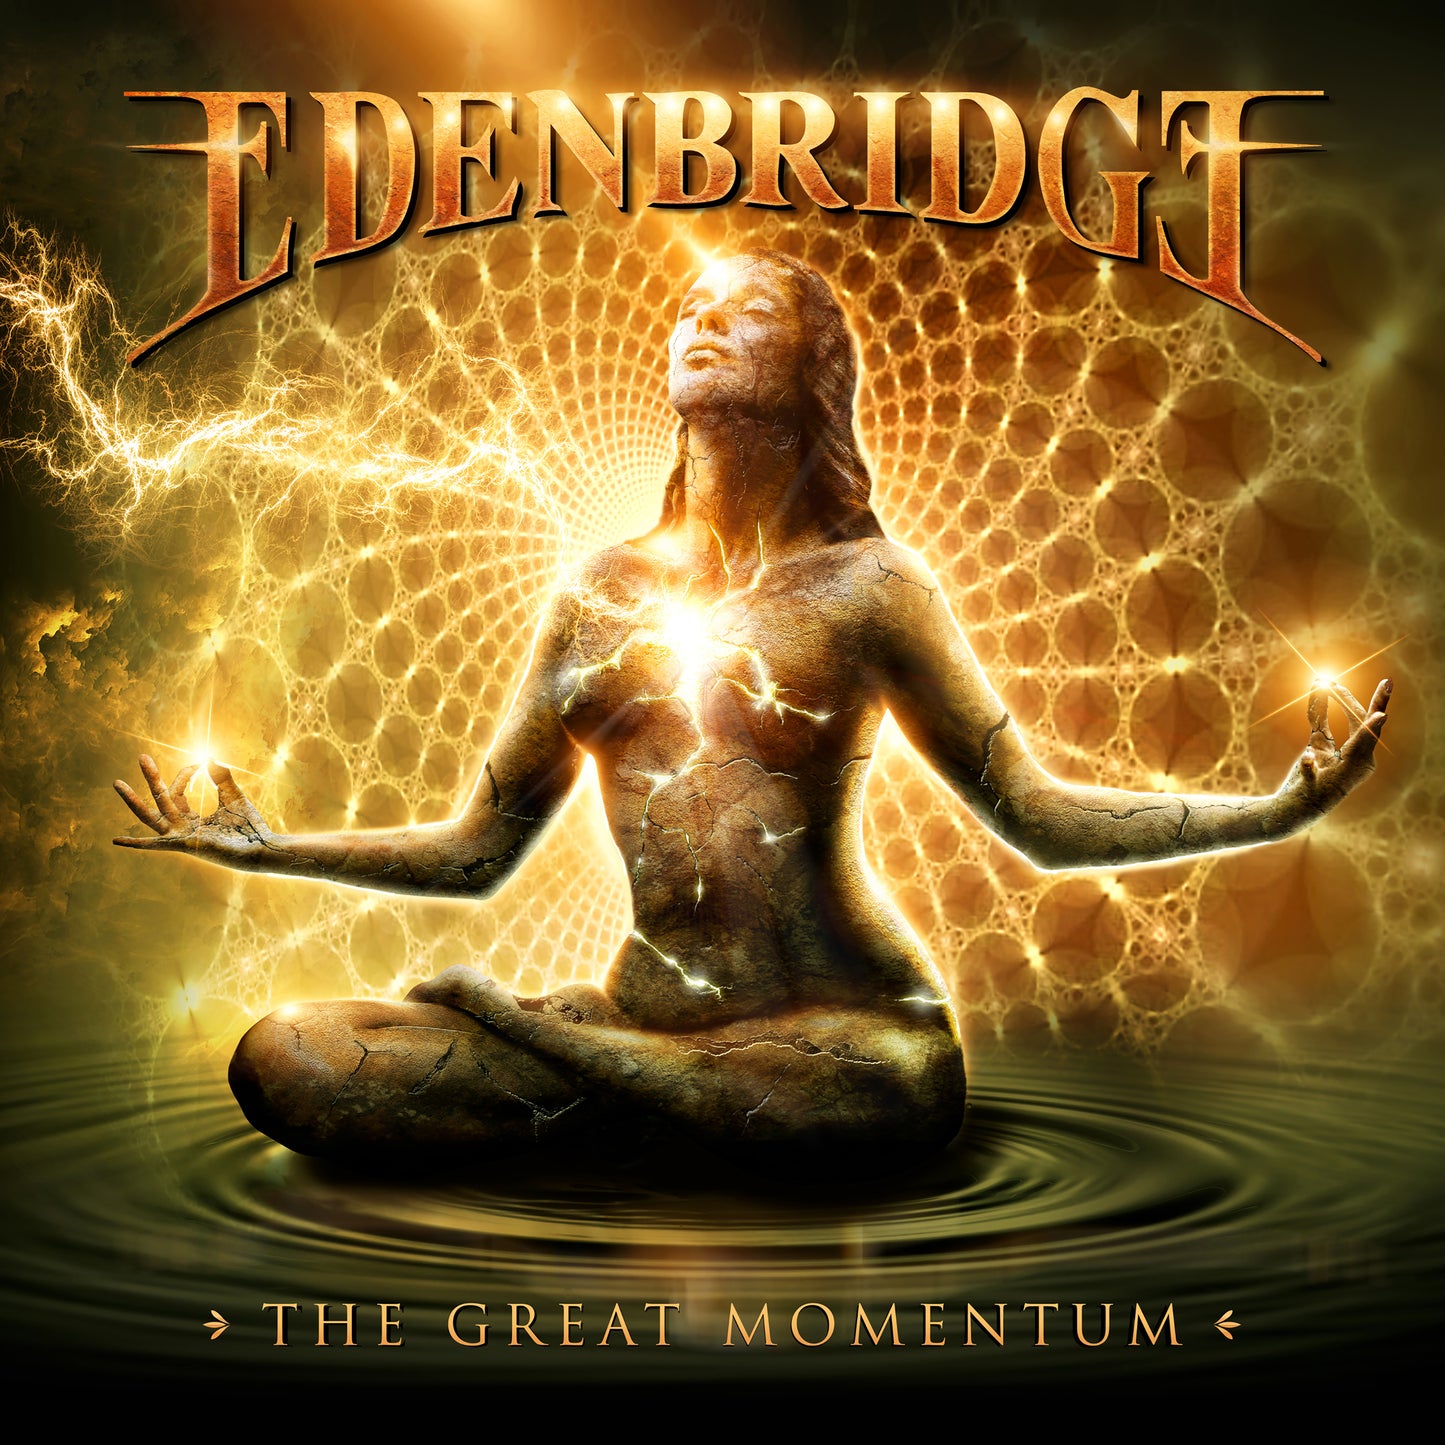 Edenbridge "The Great Momentum" CD